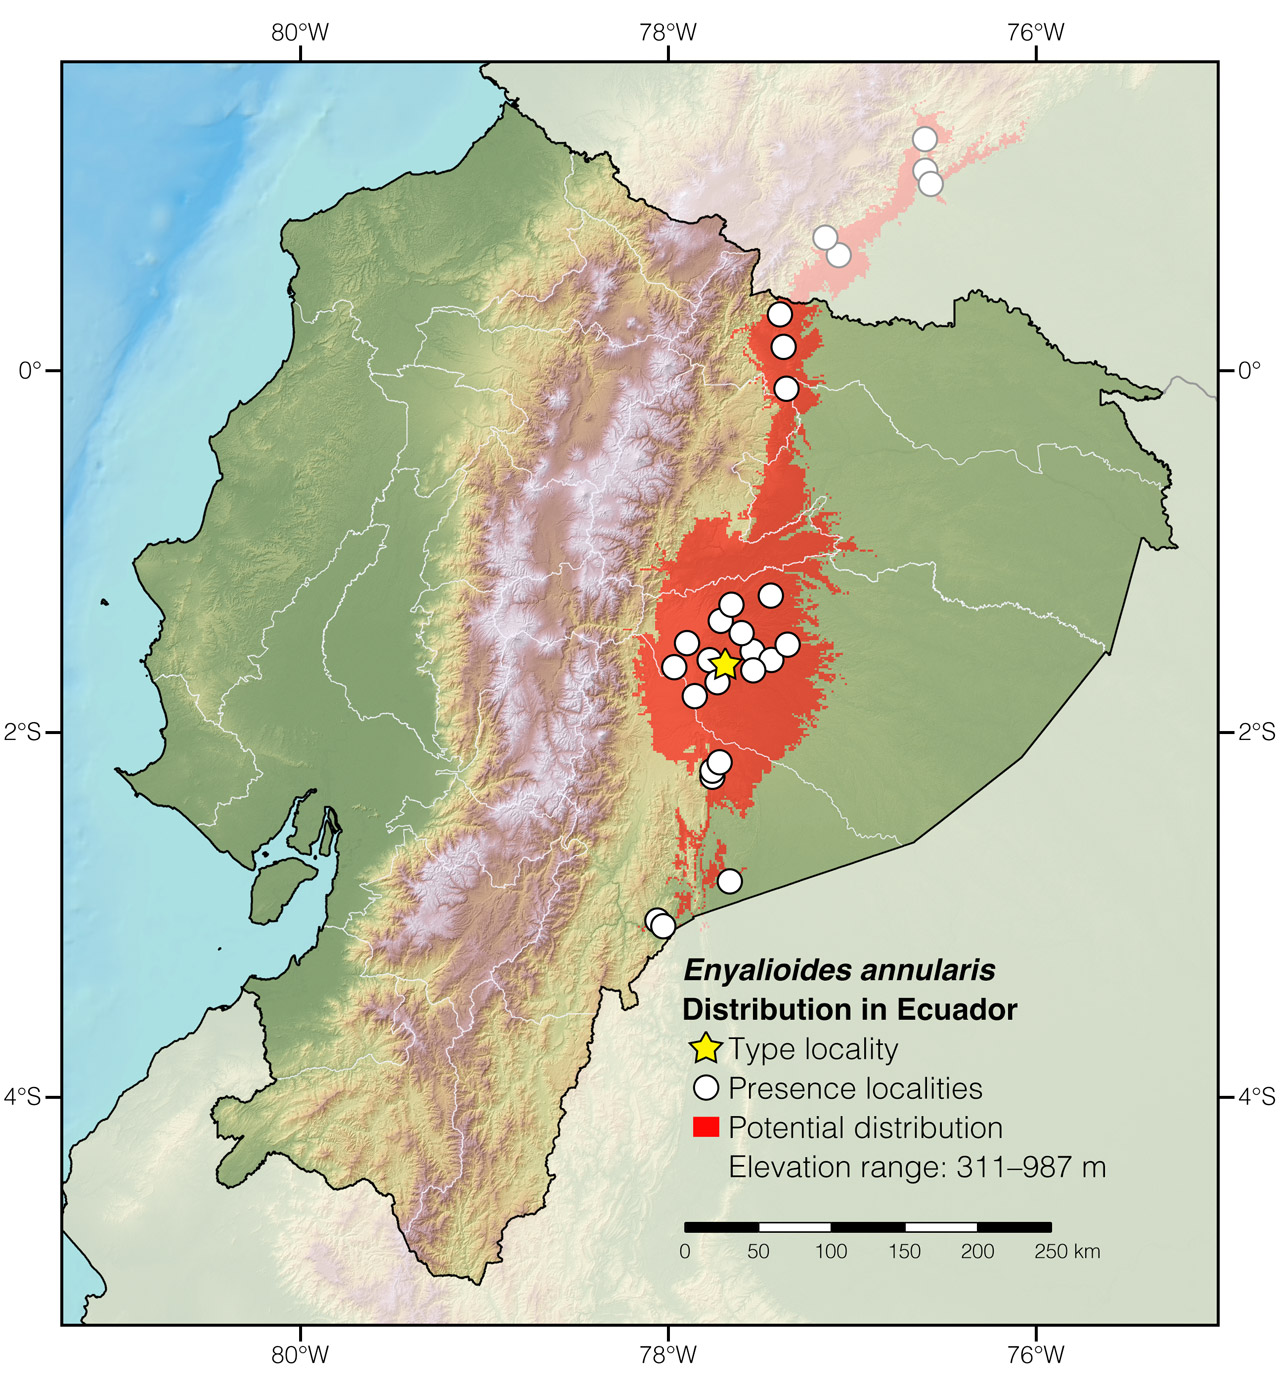 Distribution of Enyalioides annularis in Ecuador